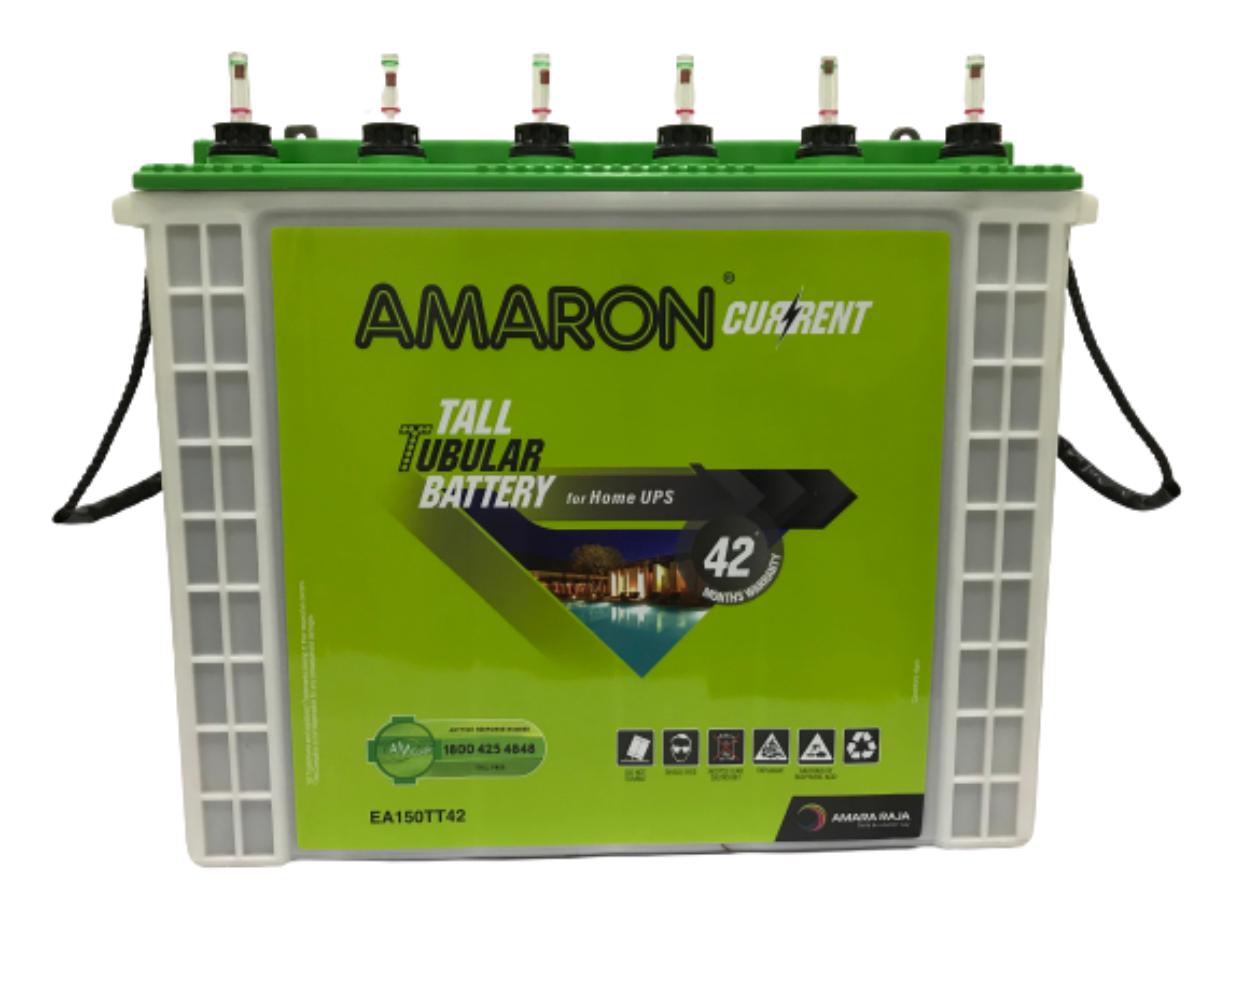 31 off on Amaron Inverter Battery